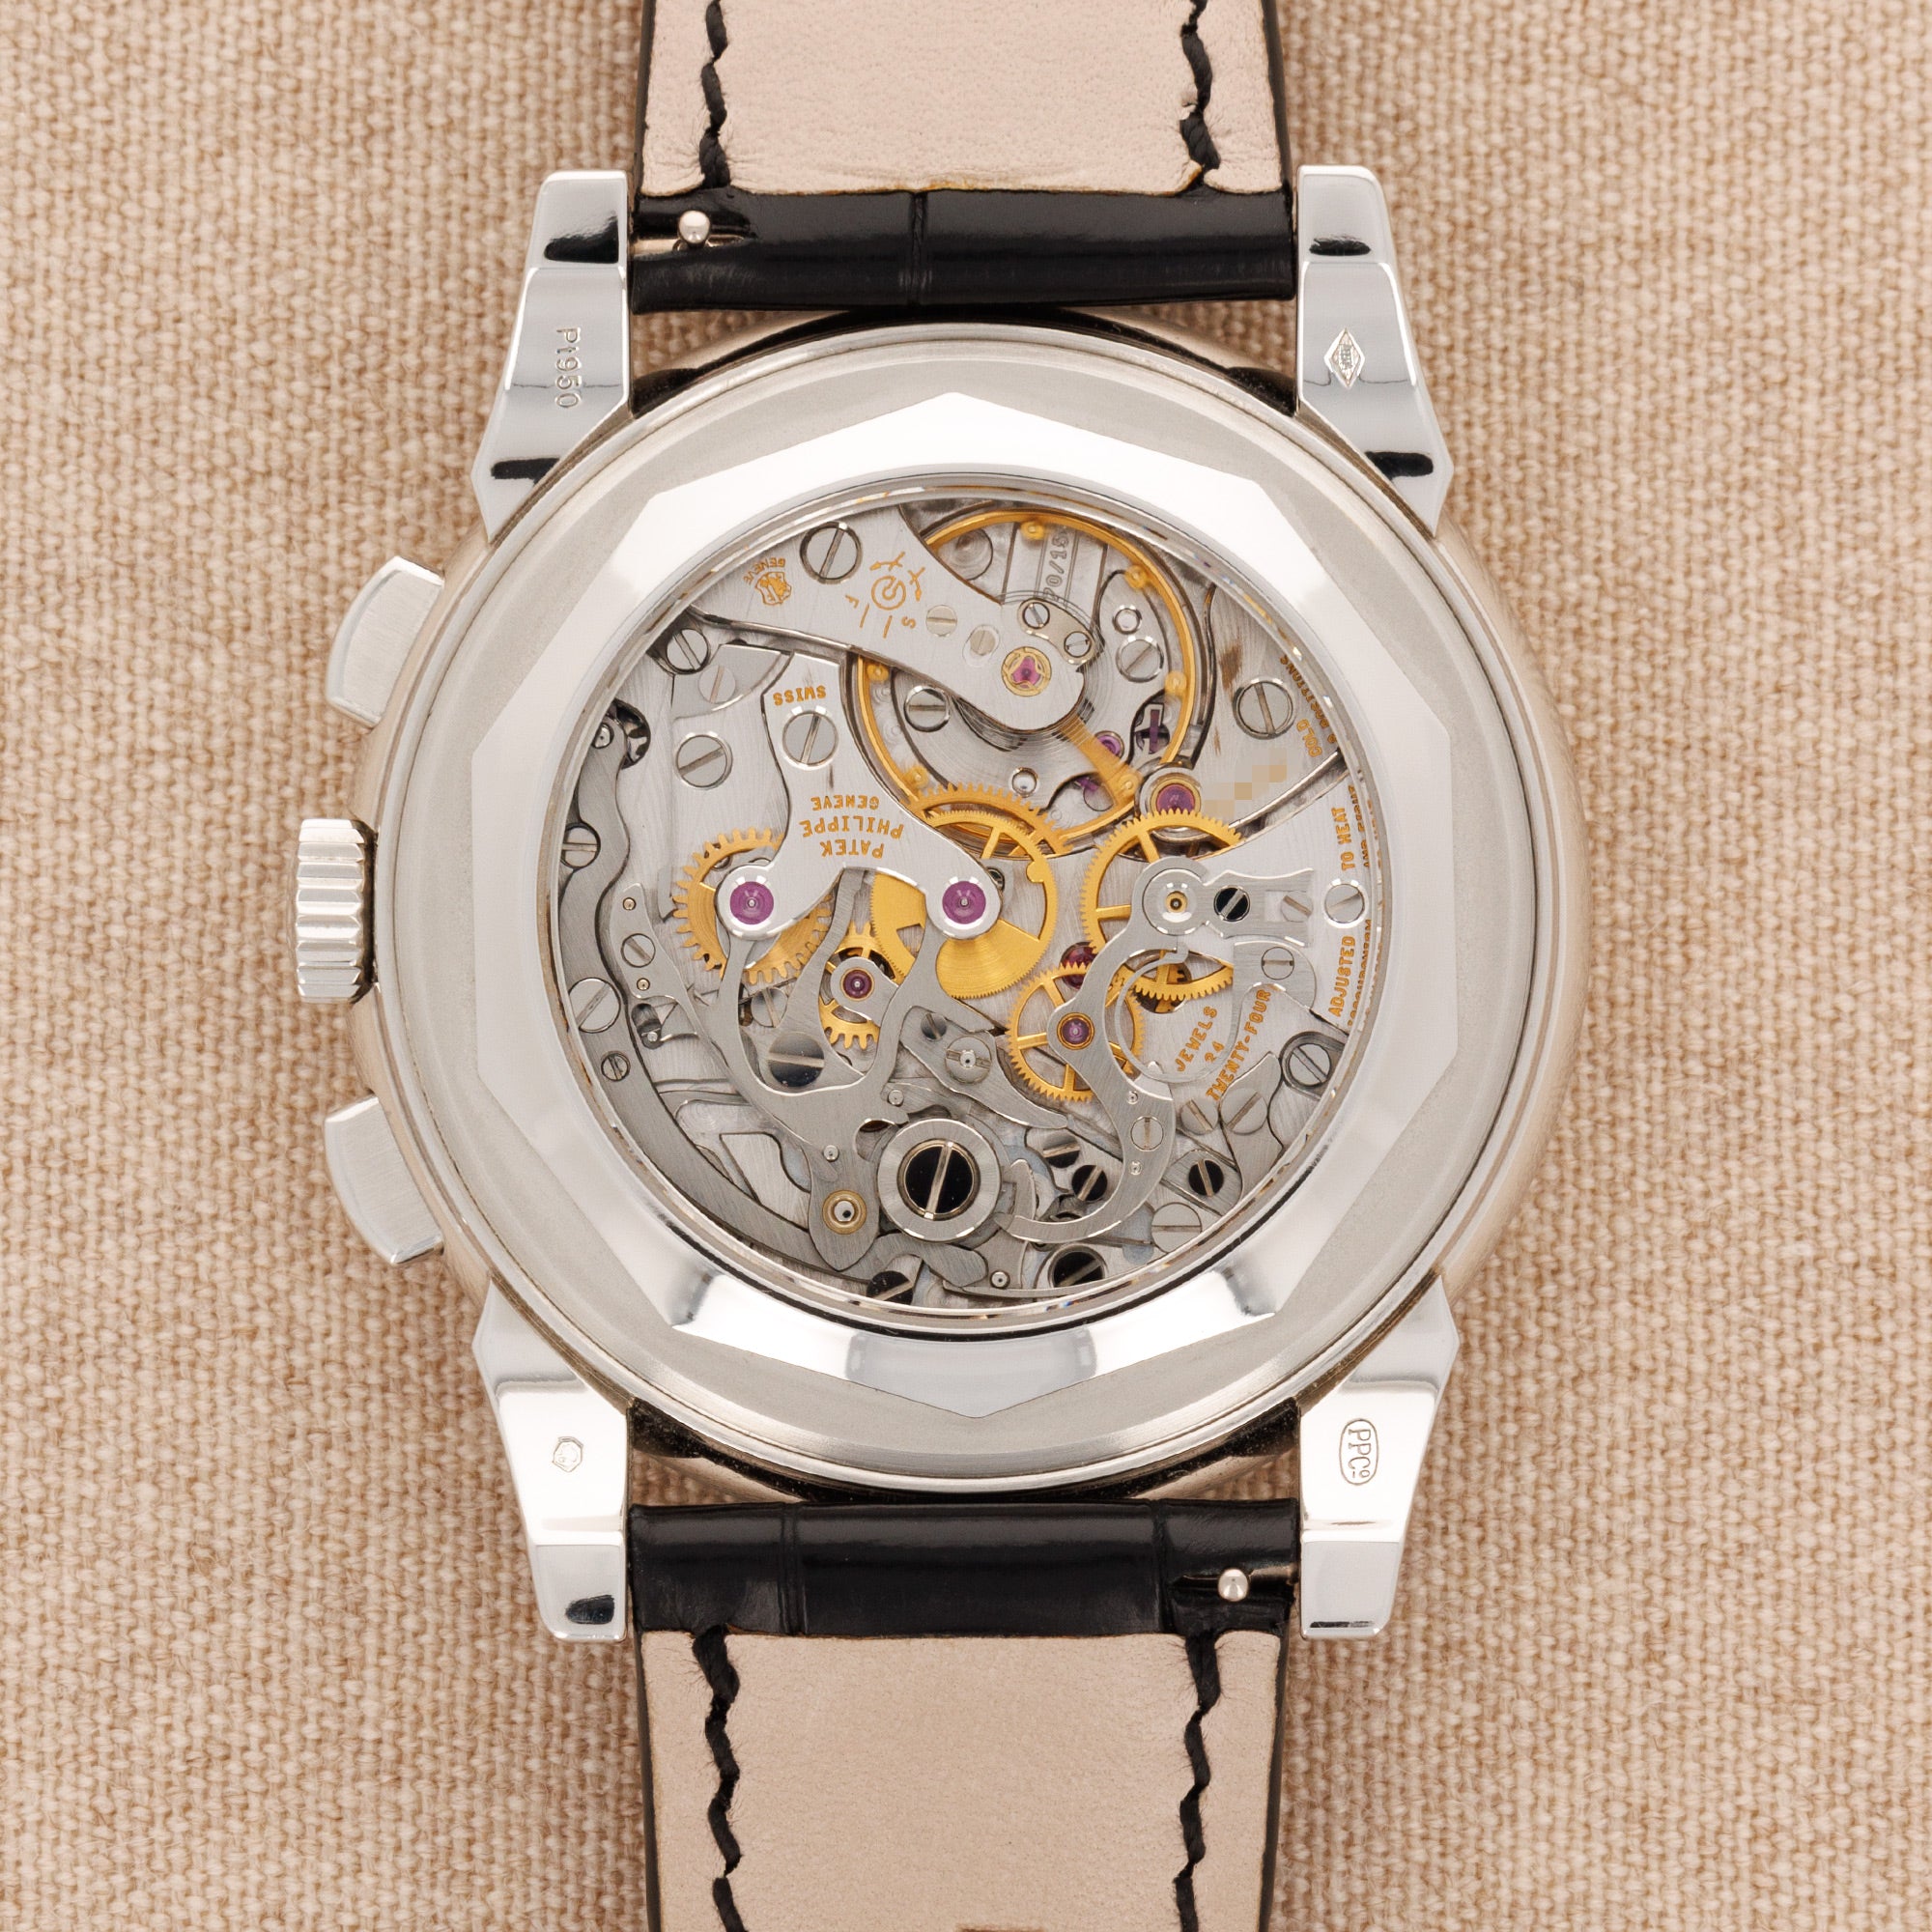 Patek Philippe - Patek Philippe Platinum Perpetual Calendar Chronograph Watch Ref. 5970 - The Keystone Watches